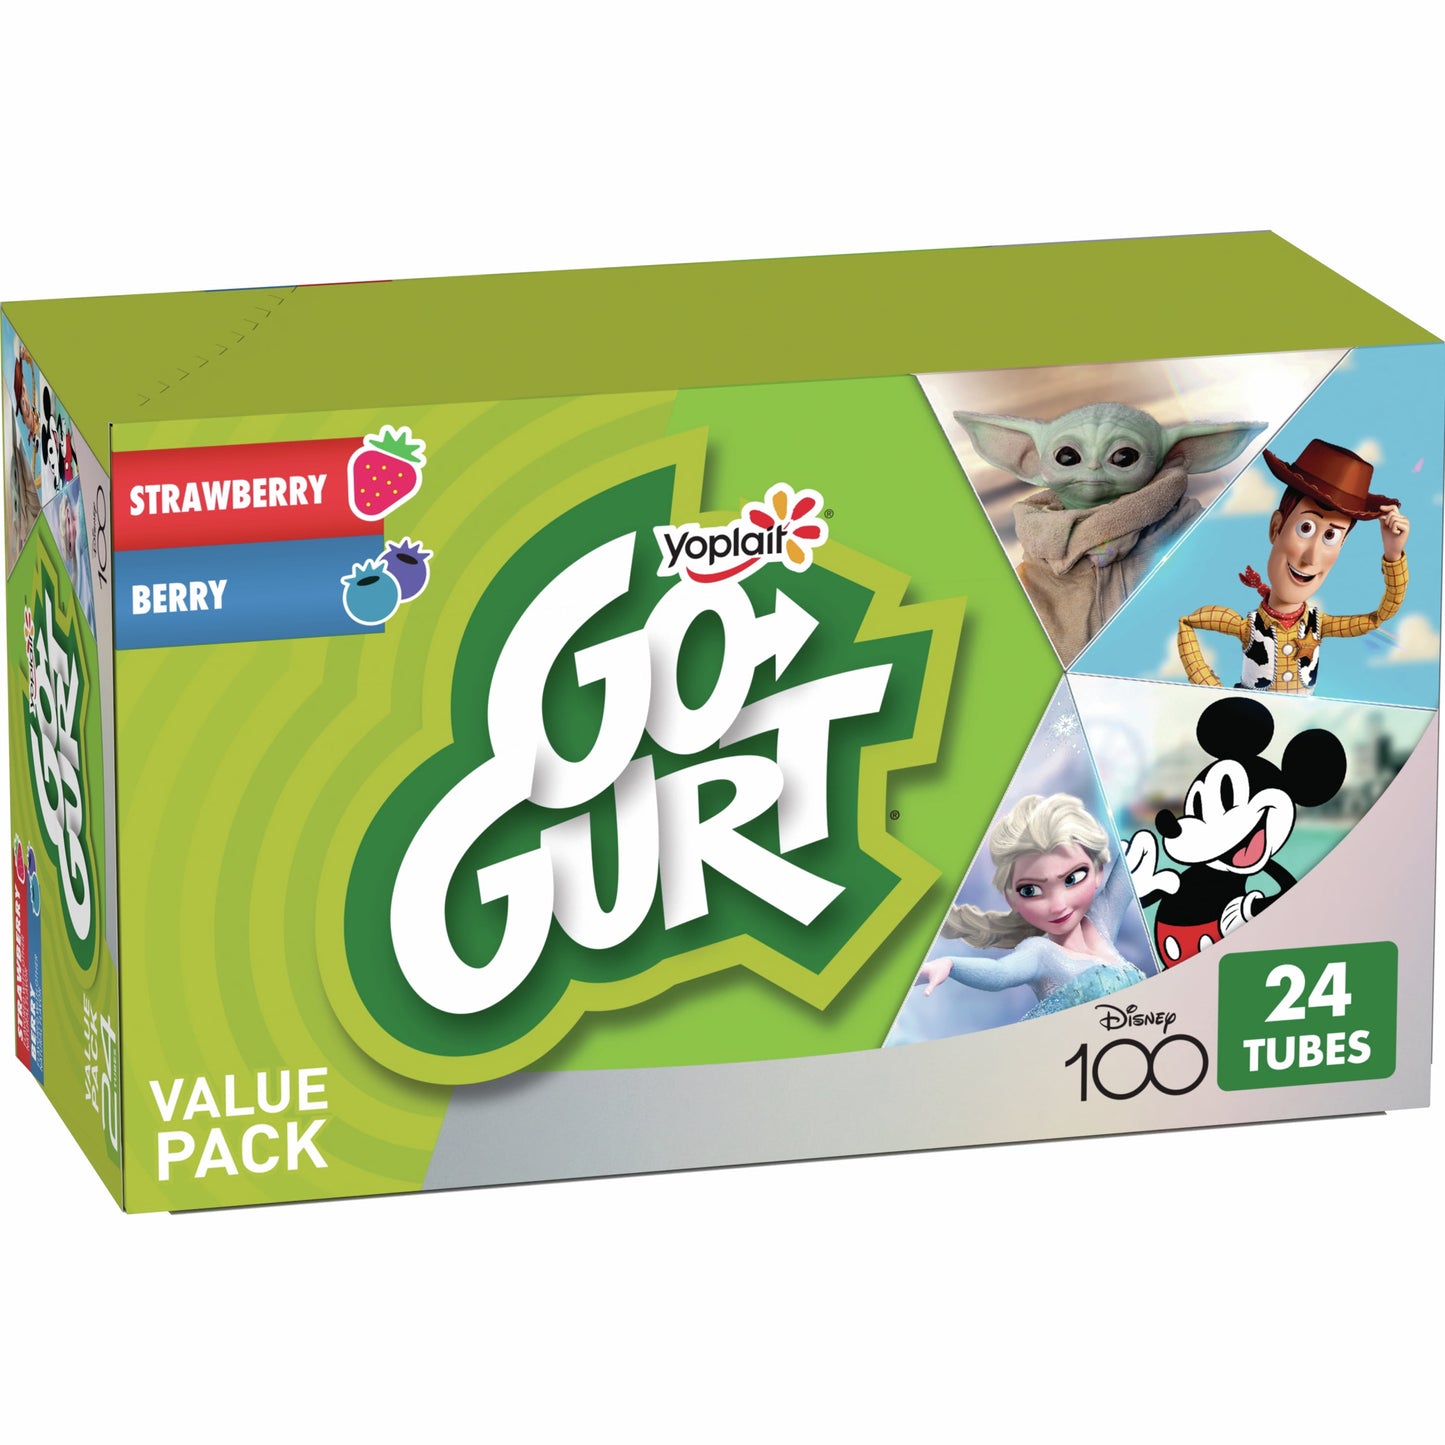 Go-GURT Disney Frozen Berry Magic and Strawberry Ice Castle Kids Fat Free Yogurt Variety Pack, Gluten Free, 2 oz. Yogurt Tubes (24 Count)